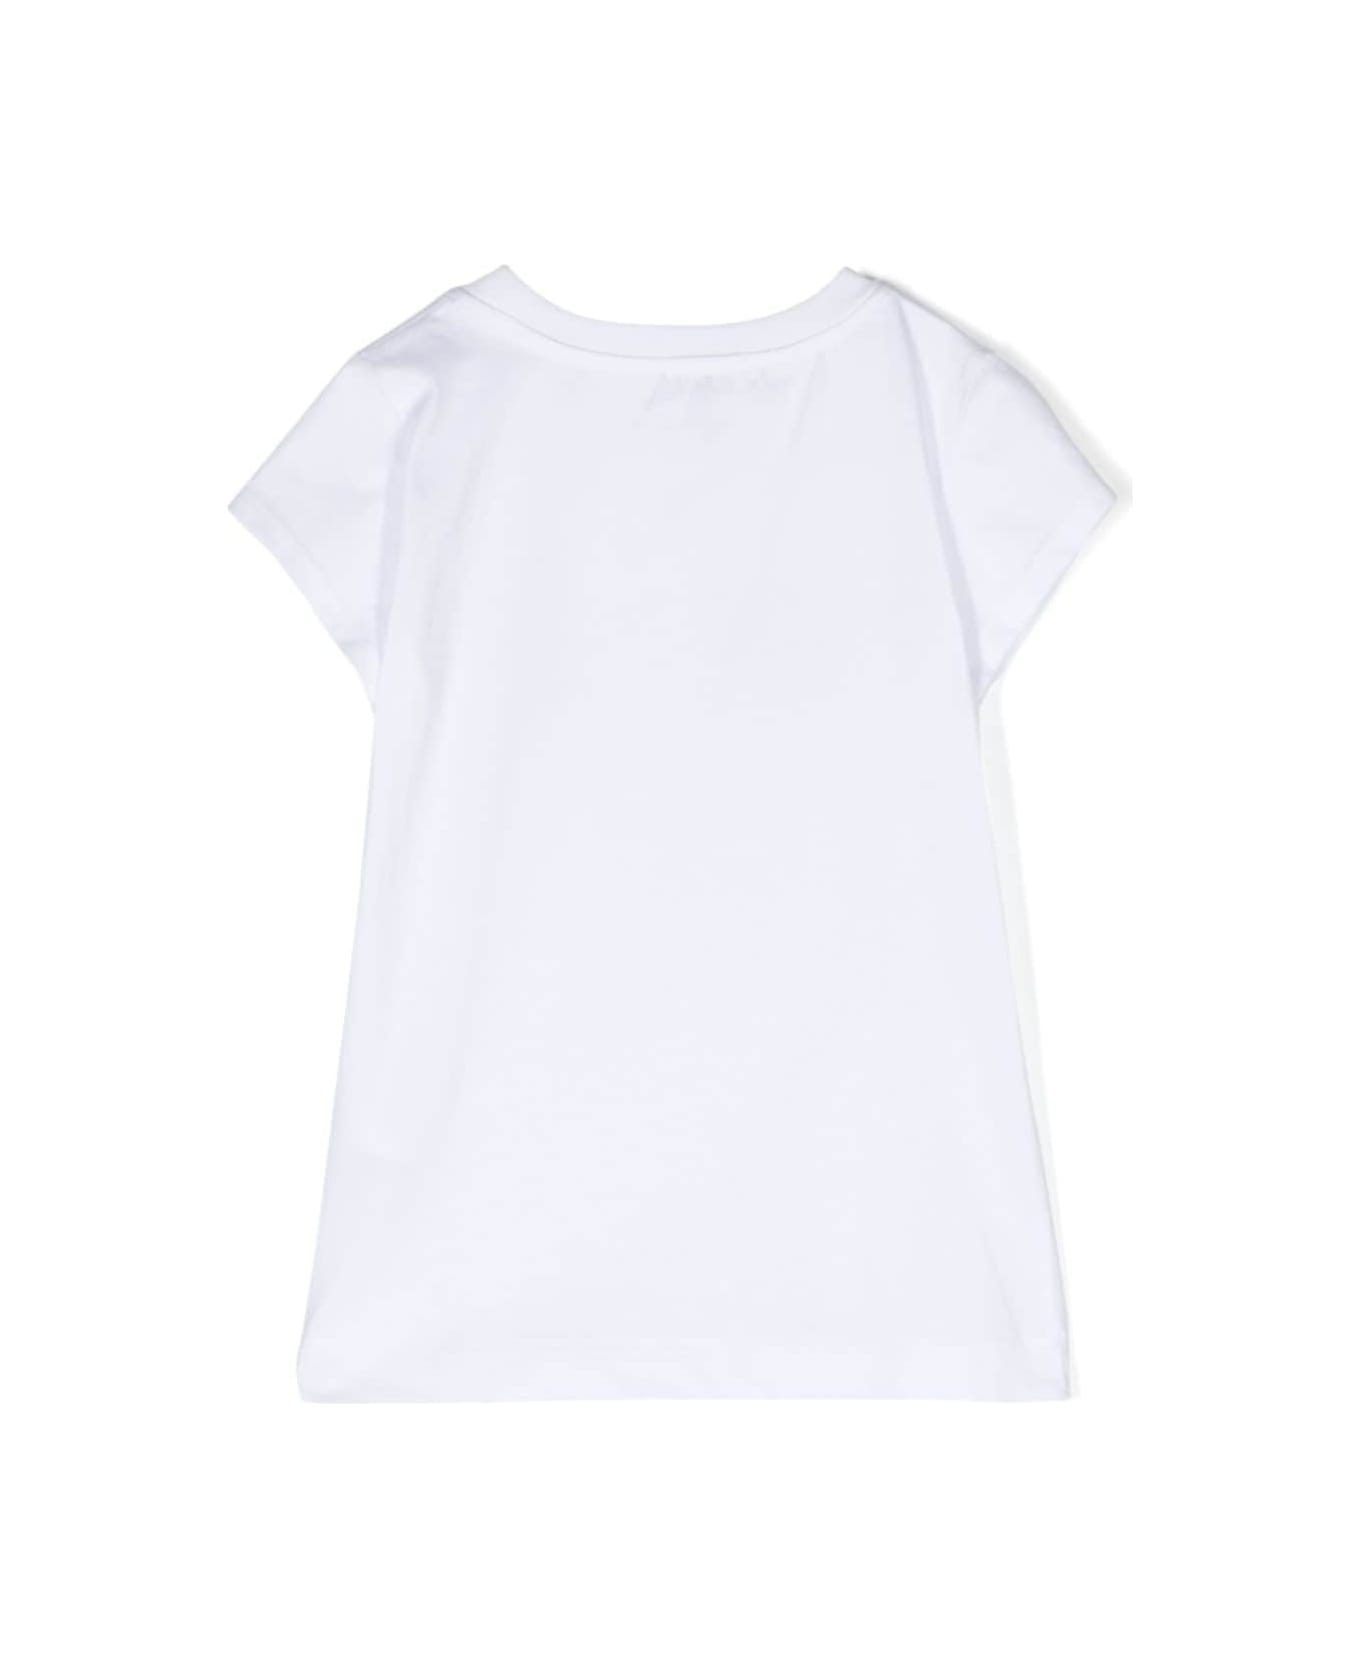 Chiara Ferragni White T-shirt With Logo Detail At The Front In Cotton Girl - White